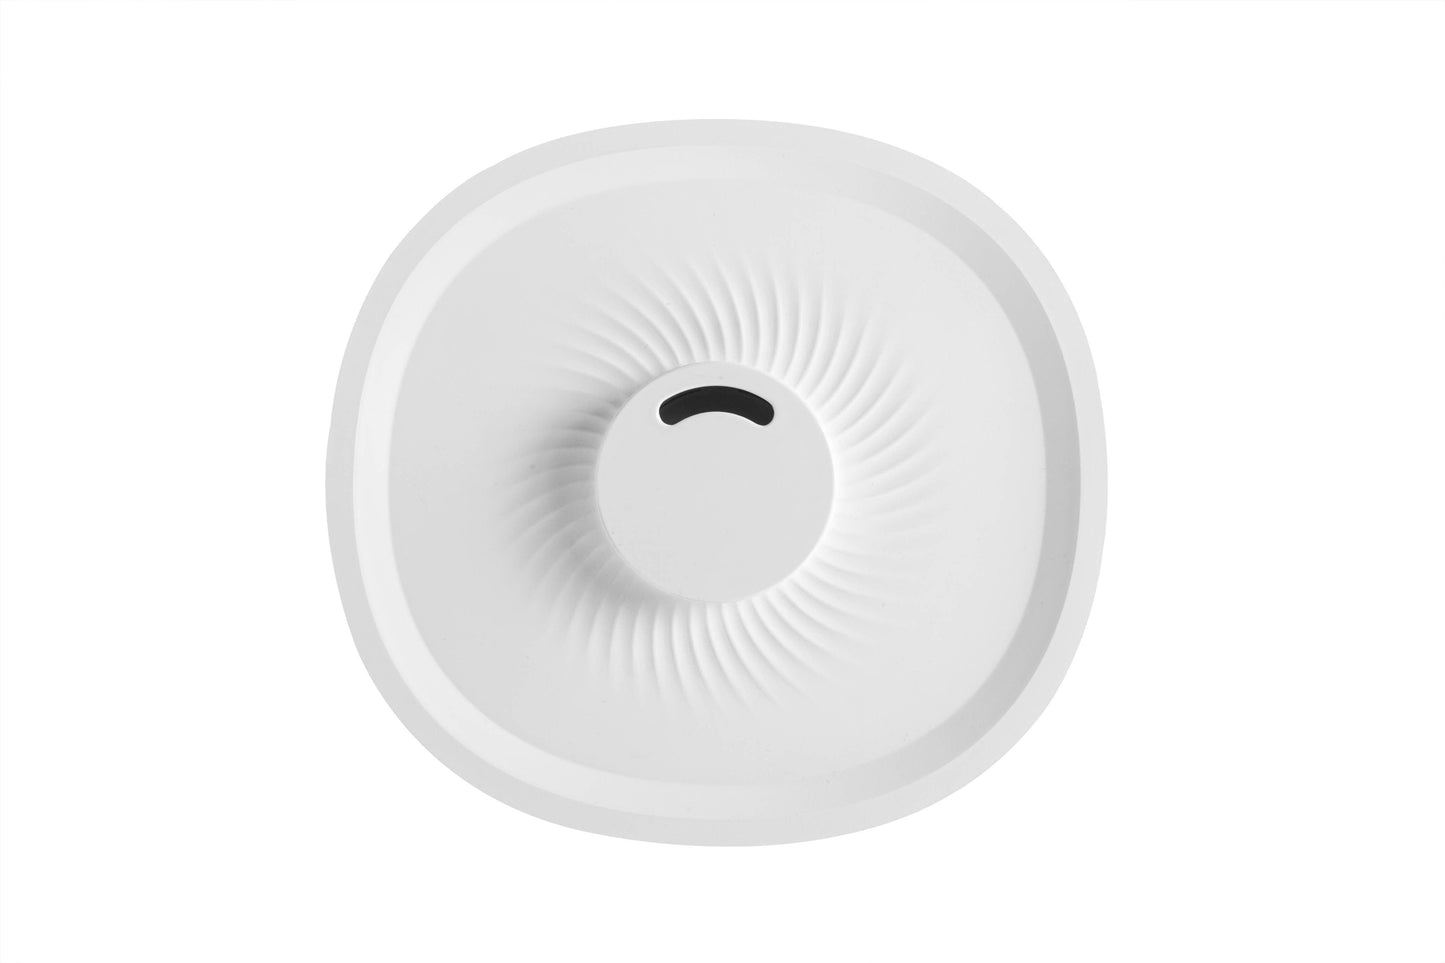 Kogan SmarterHomeâ„¢ 2.8L Humidifier | Auzzi Store